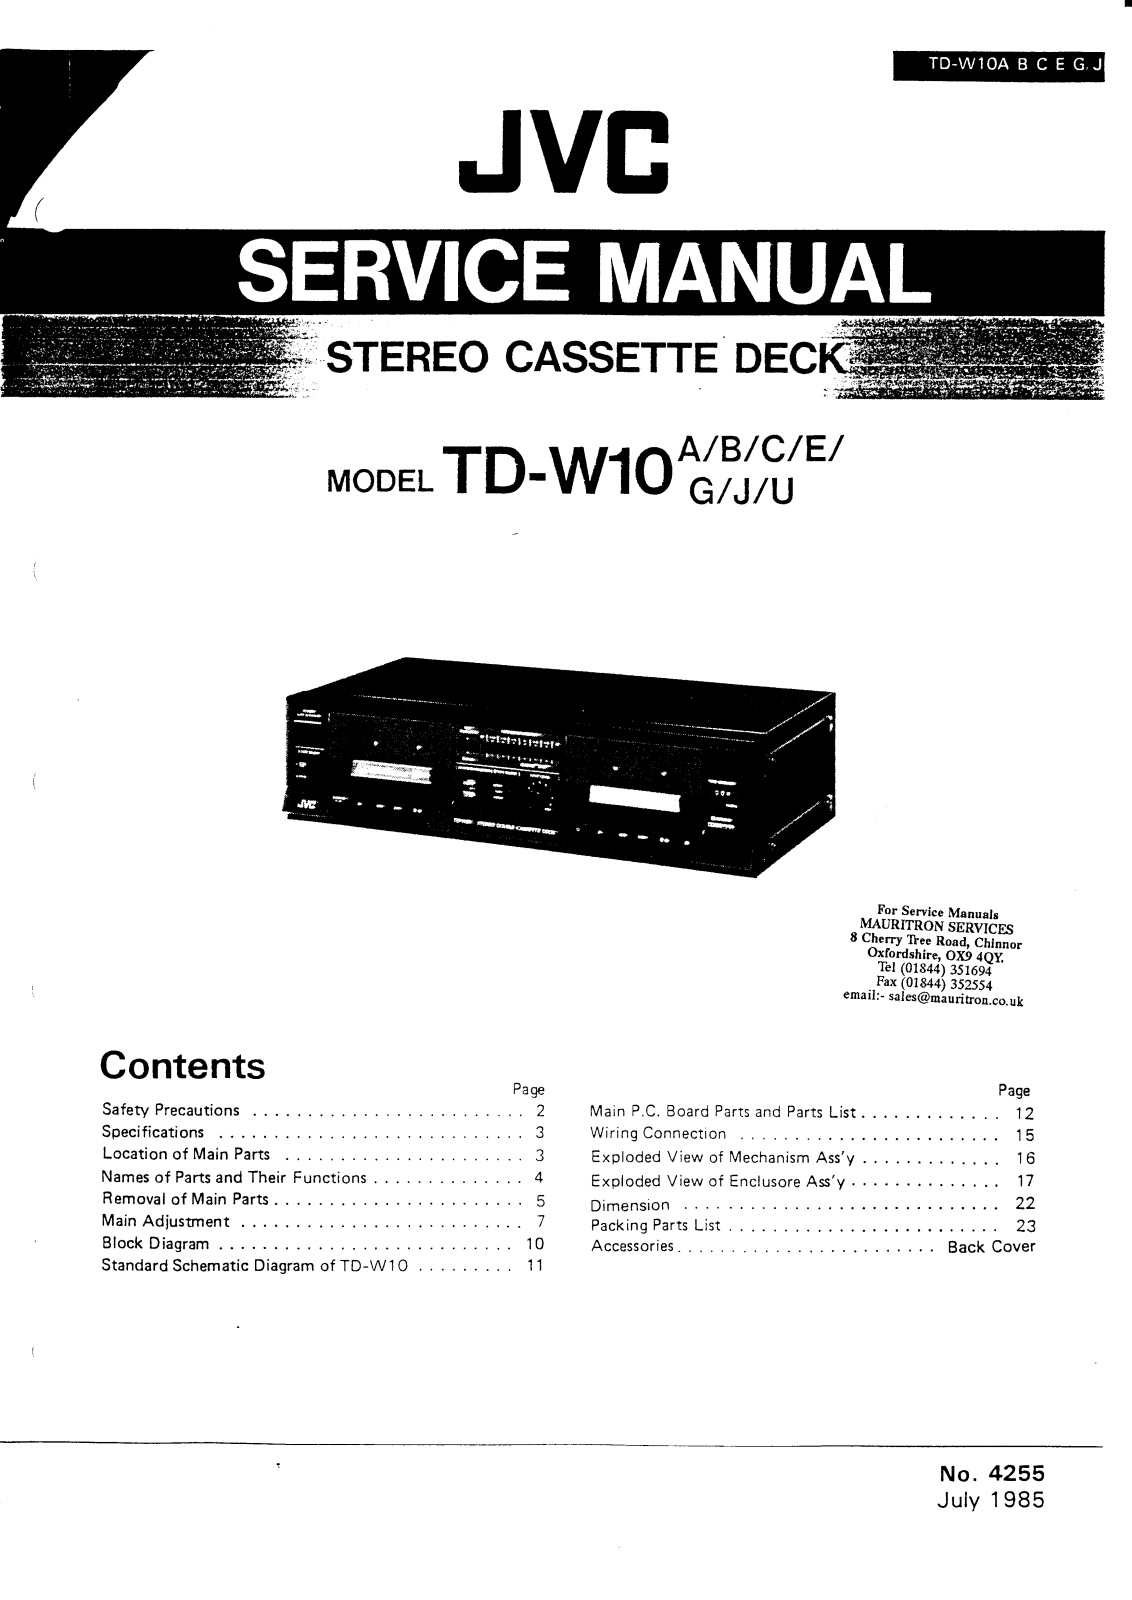 JVC TDW-10 Service manual